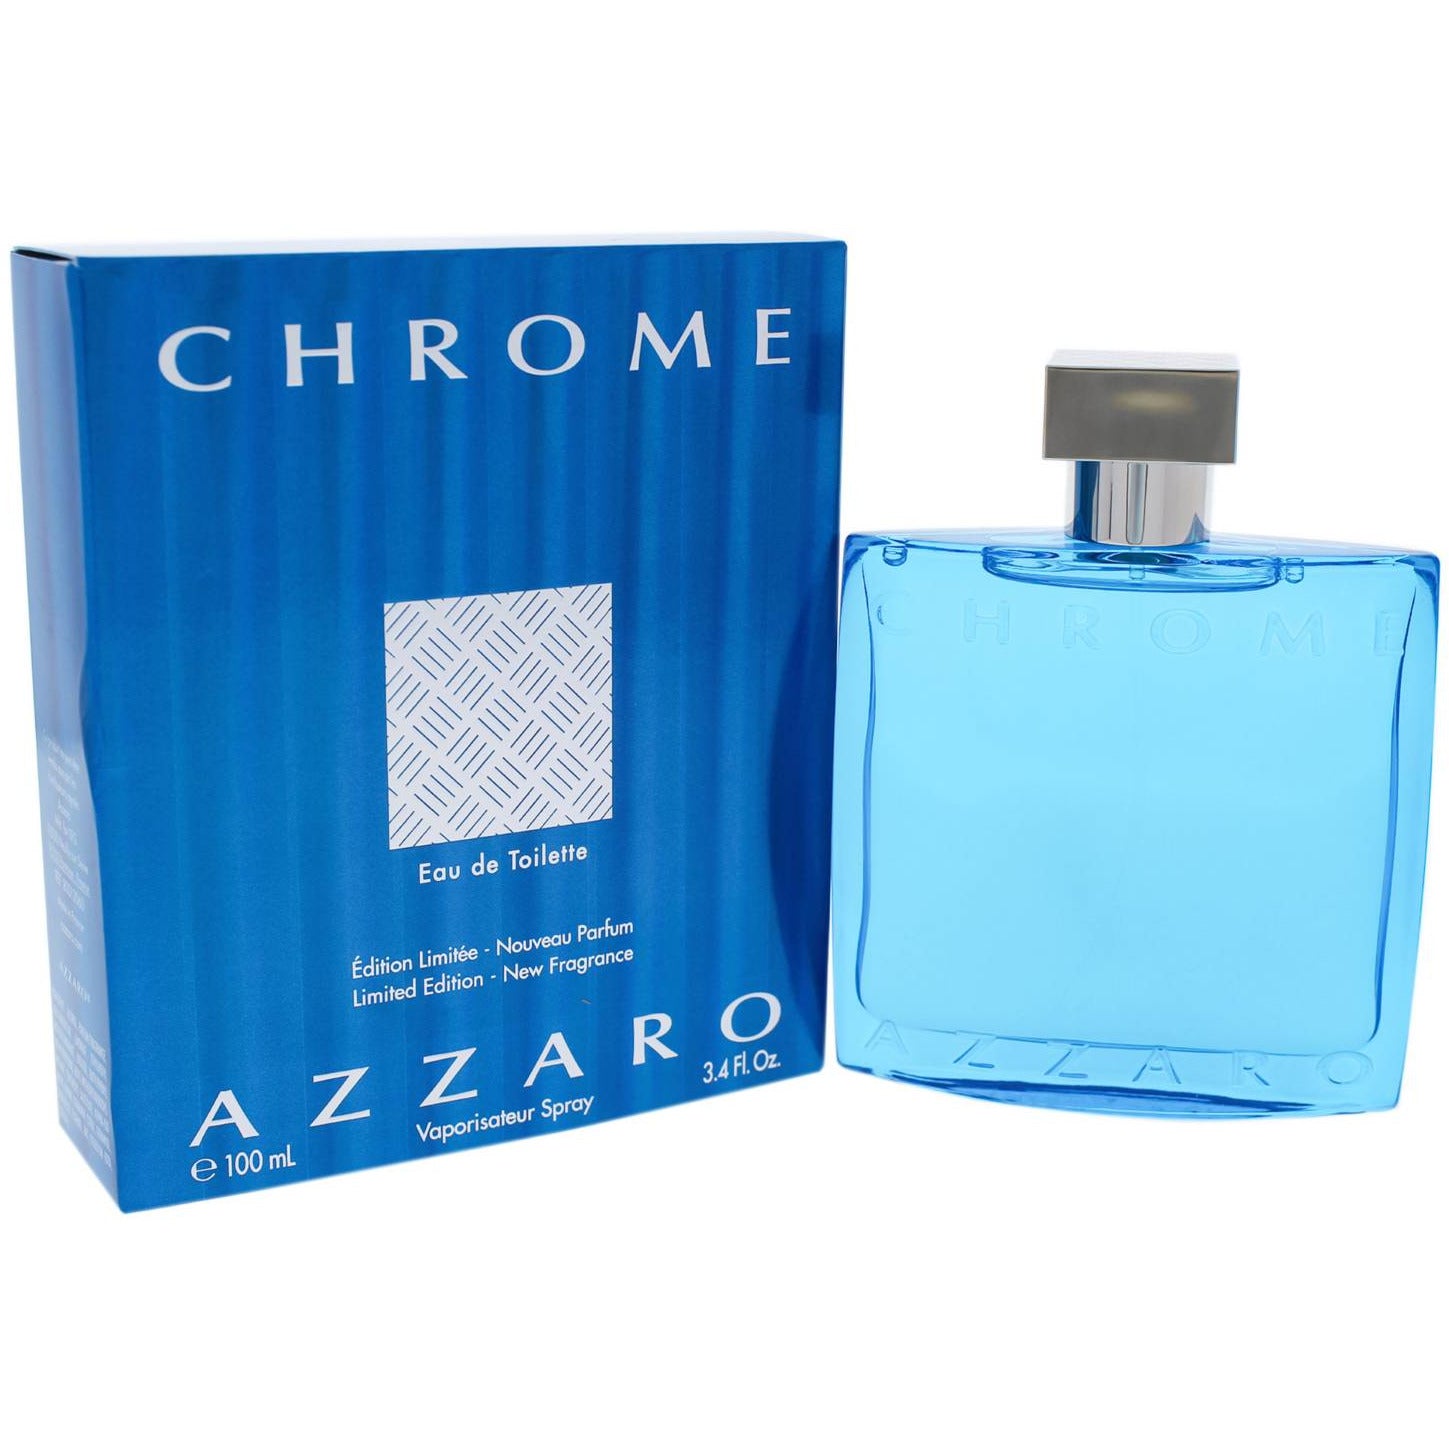    Azzaro-Chrome-Edition-Limitee-chile